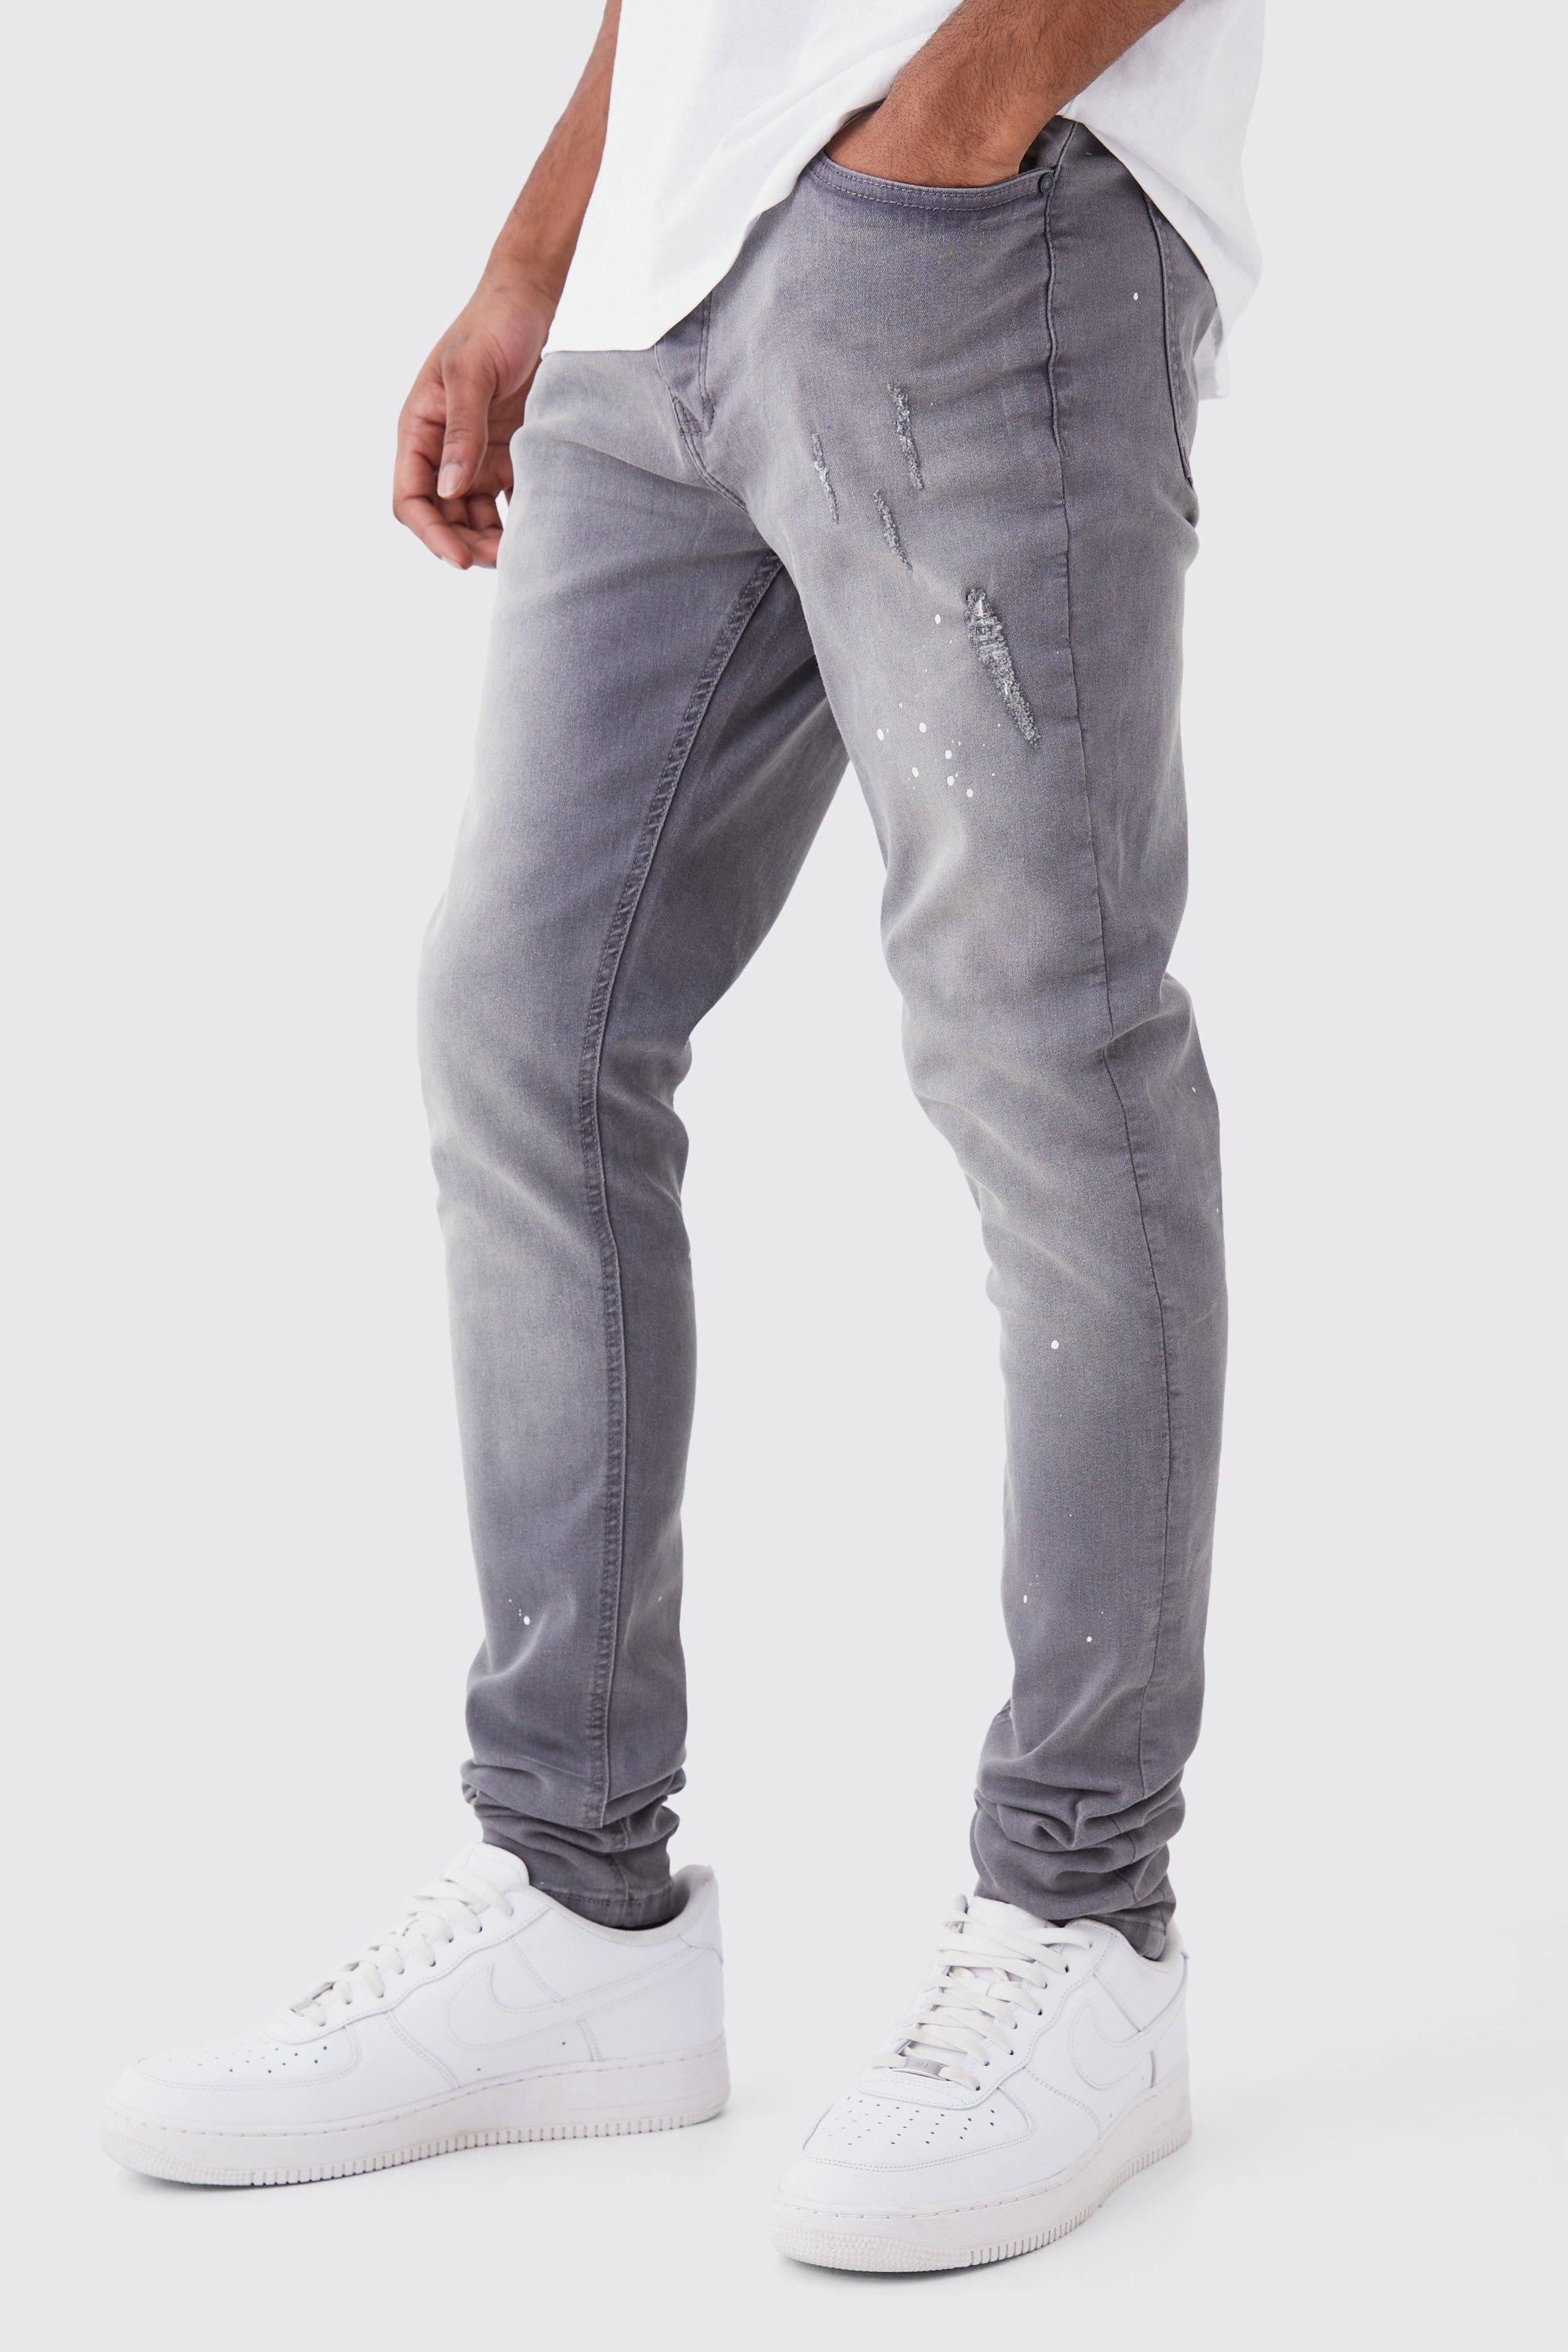 tall - jean skinny teinté homme - gris - 36, gris